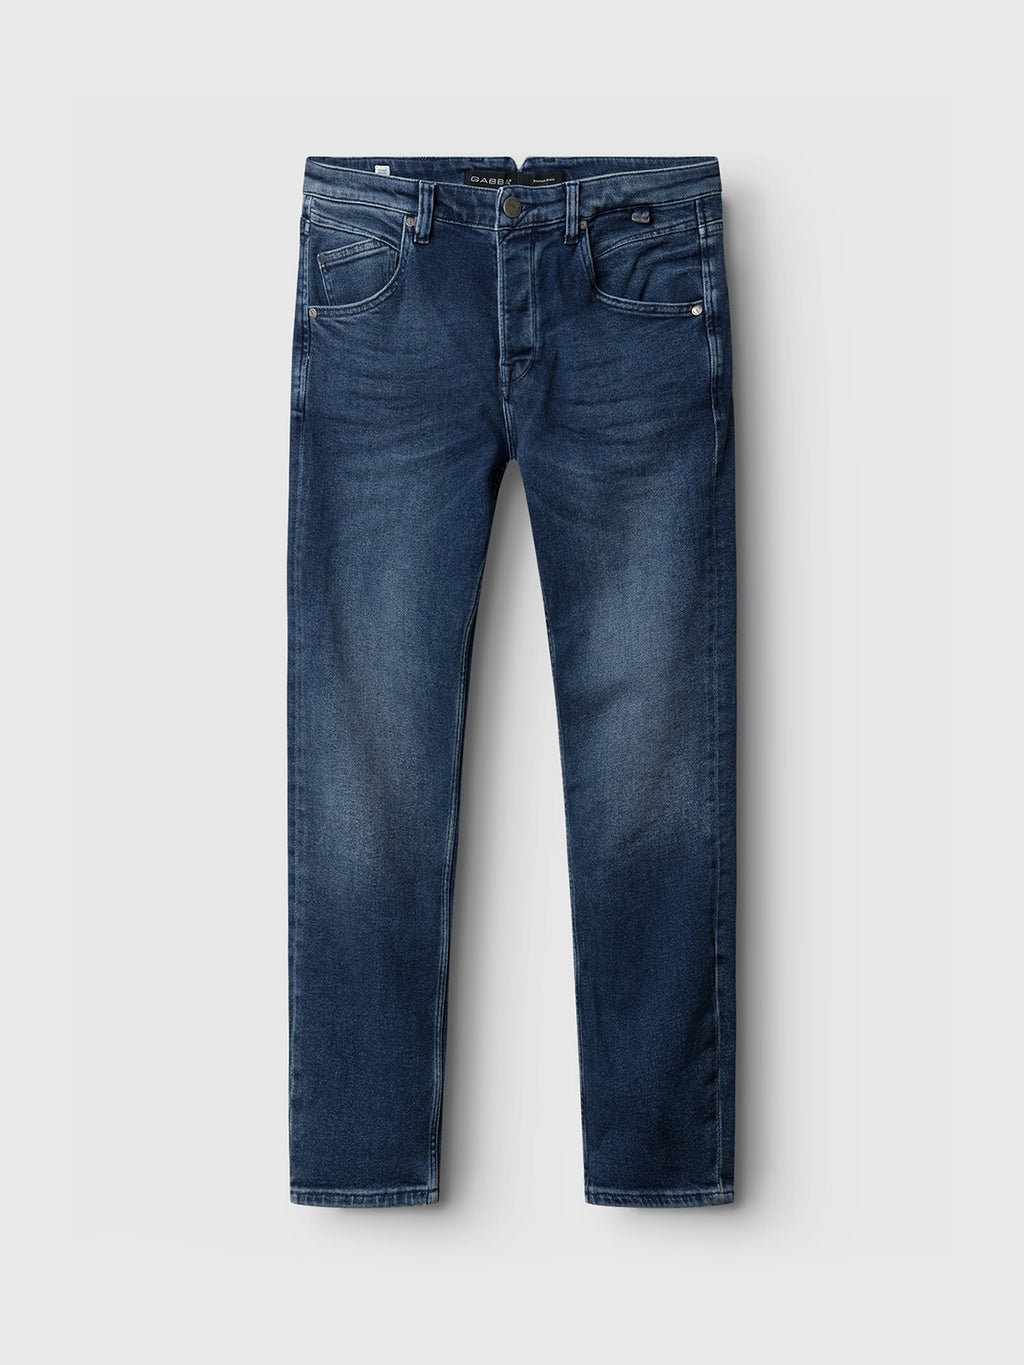 Alex K3868 Jeans - Denim wash